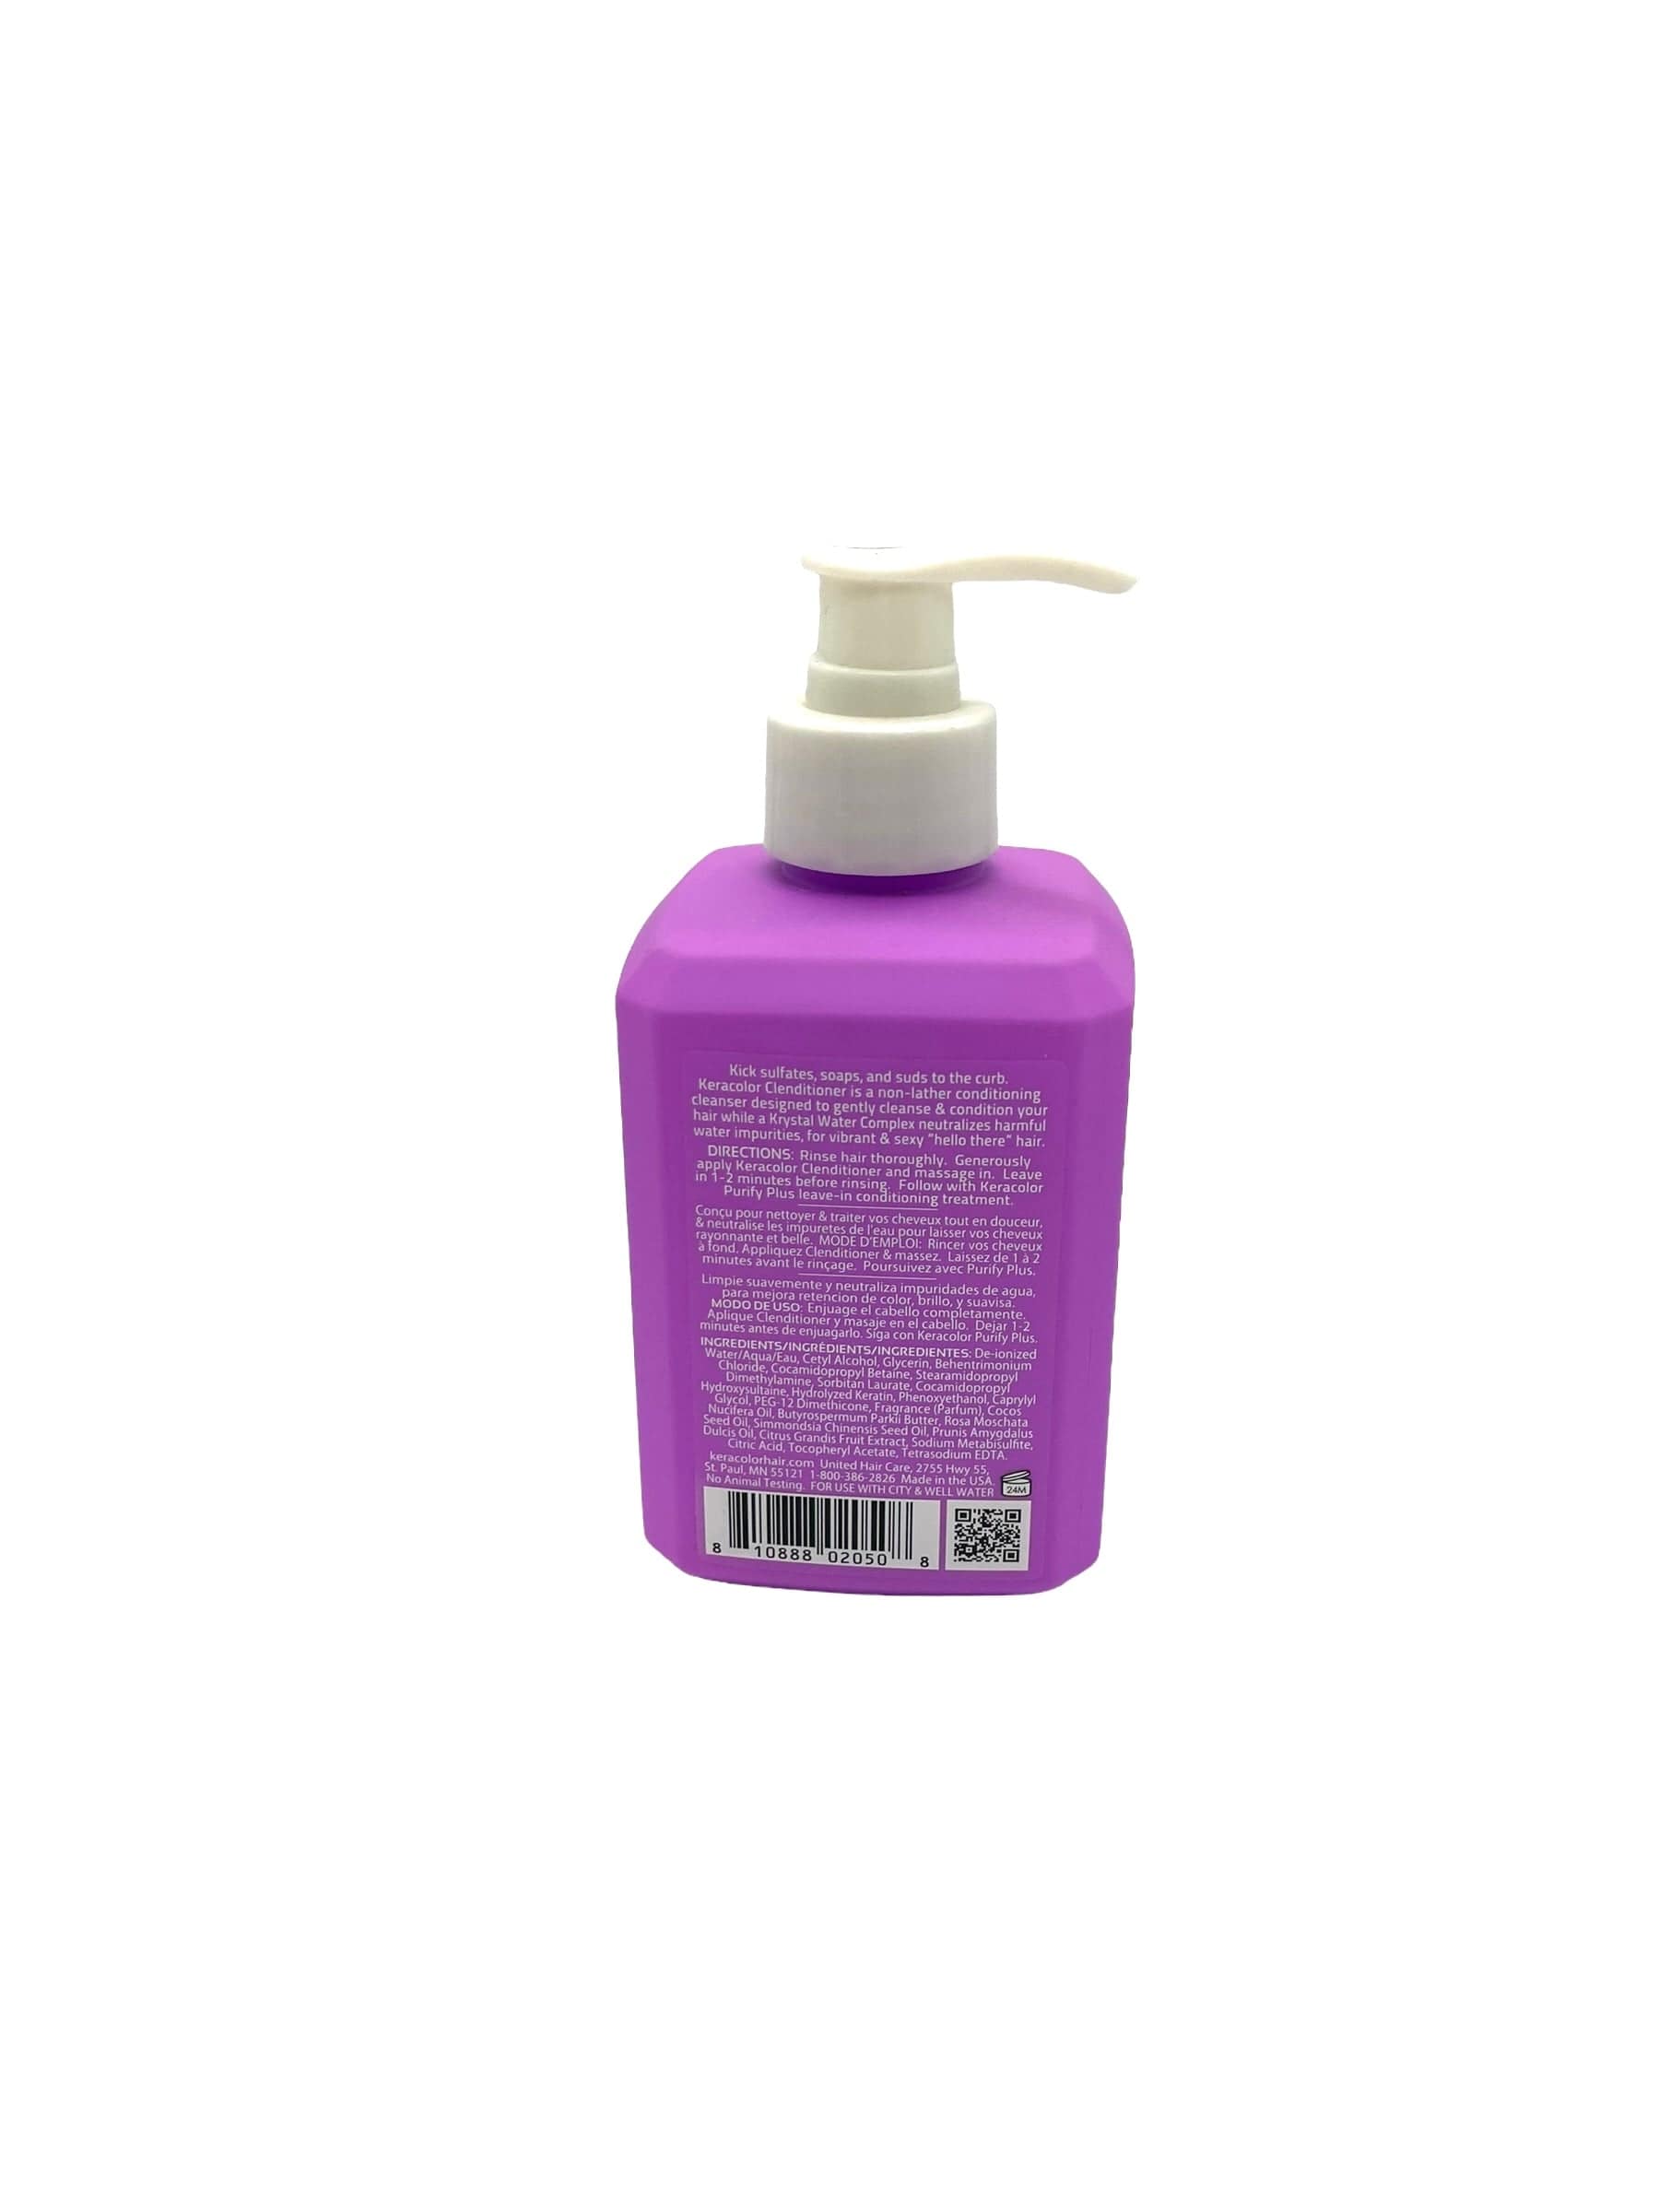 Keracolor Clenditioner Chlorine & Minerals Neutralizer Cleanser 12 oz Shampoo & Conditioner